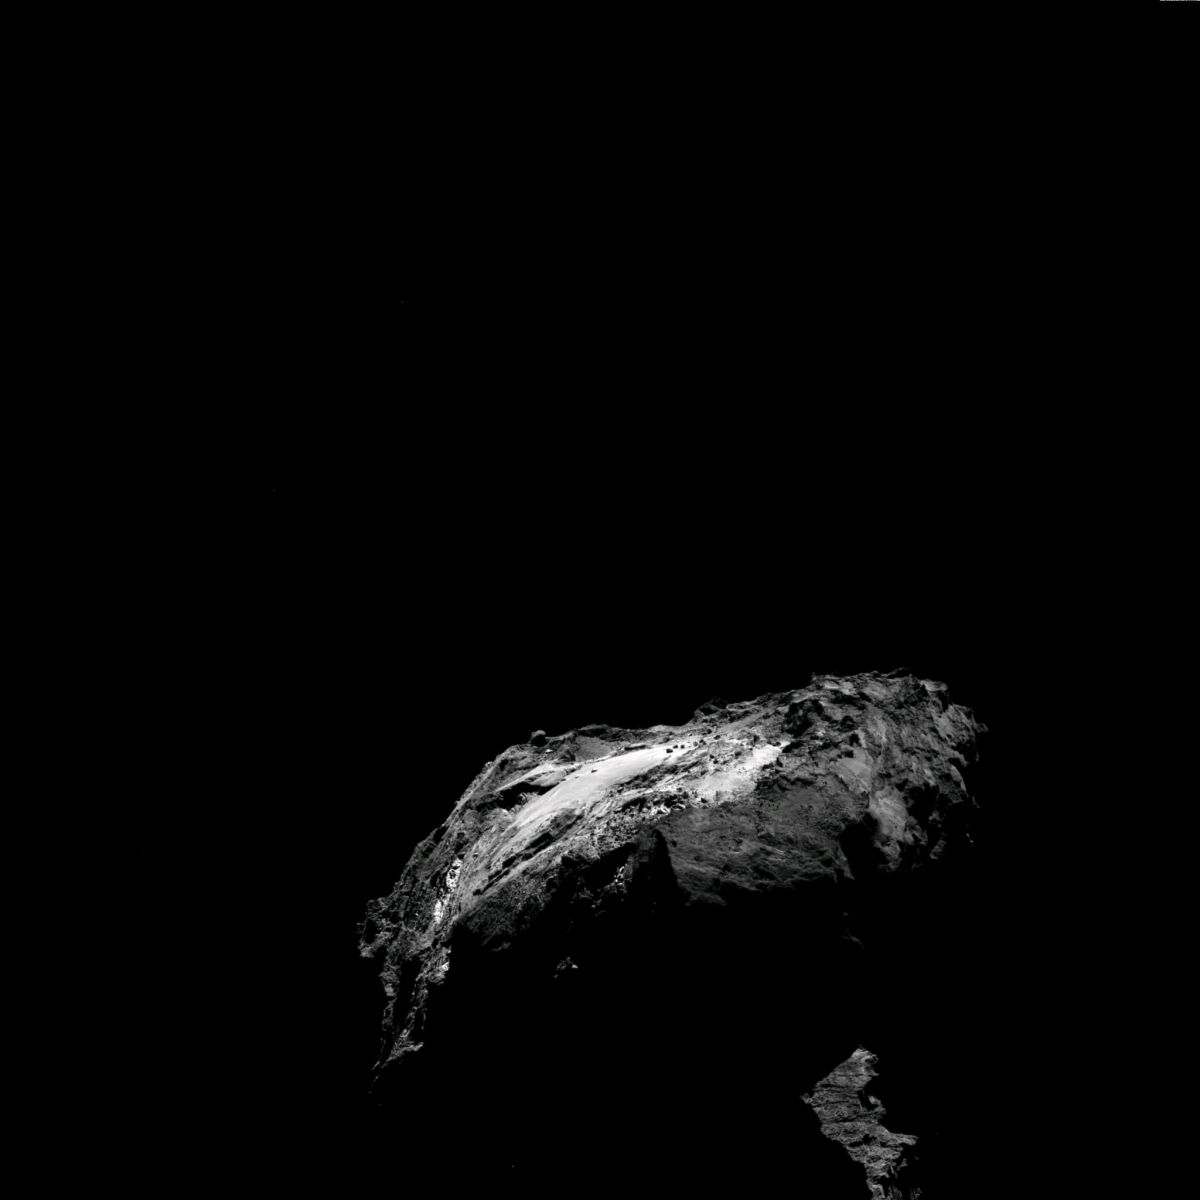 Comet on 21 April 2016 OSIRIS wide angle camera 1